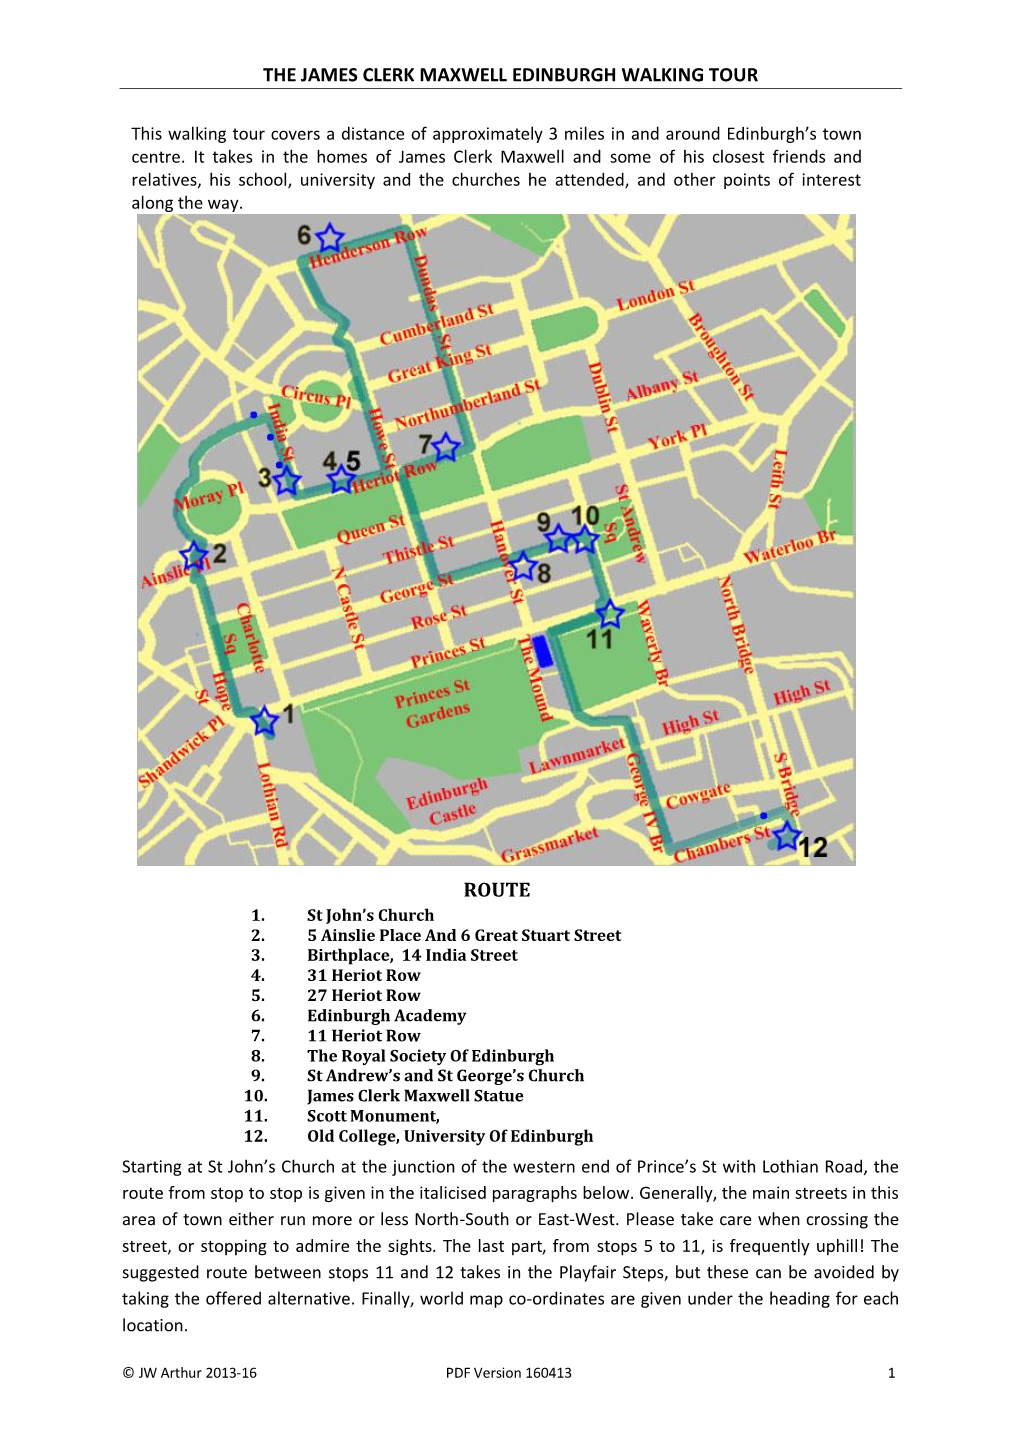 The James Clerk Maxwell Edinburgh Walking Tour Route